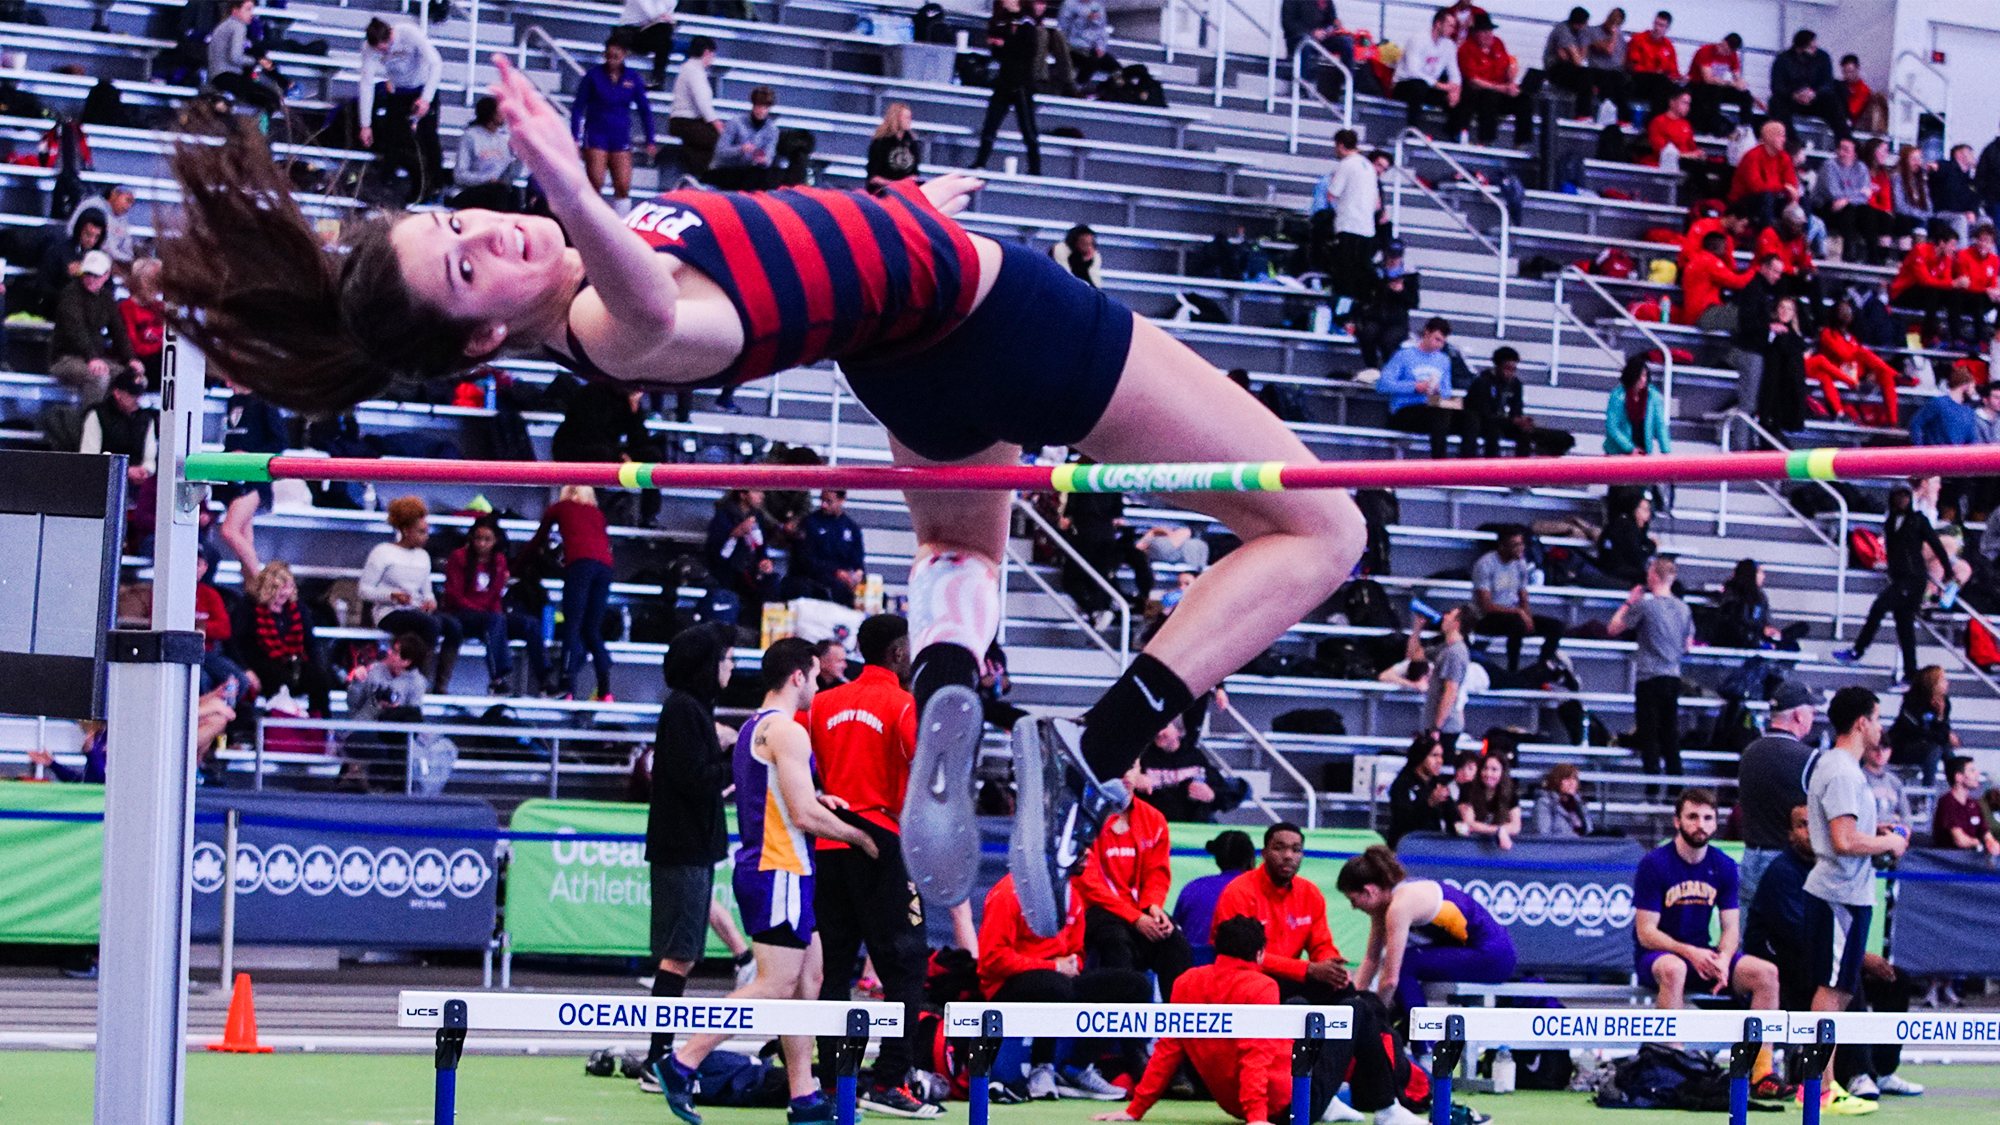 Anna Peyton Malizia jumps over the high jump bar at an outdoor meet.